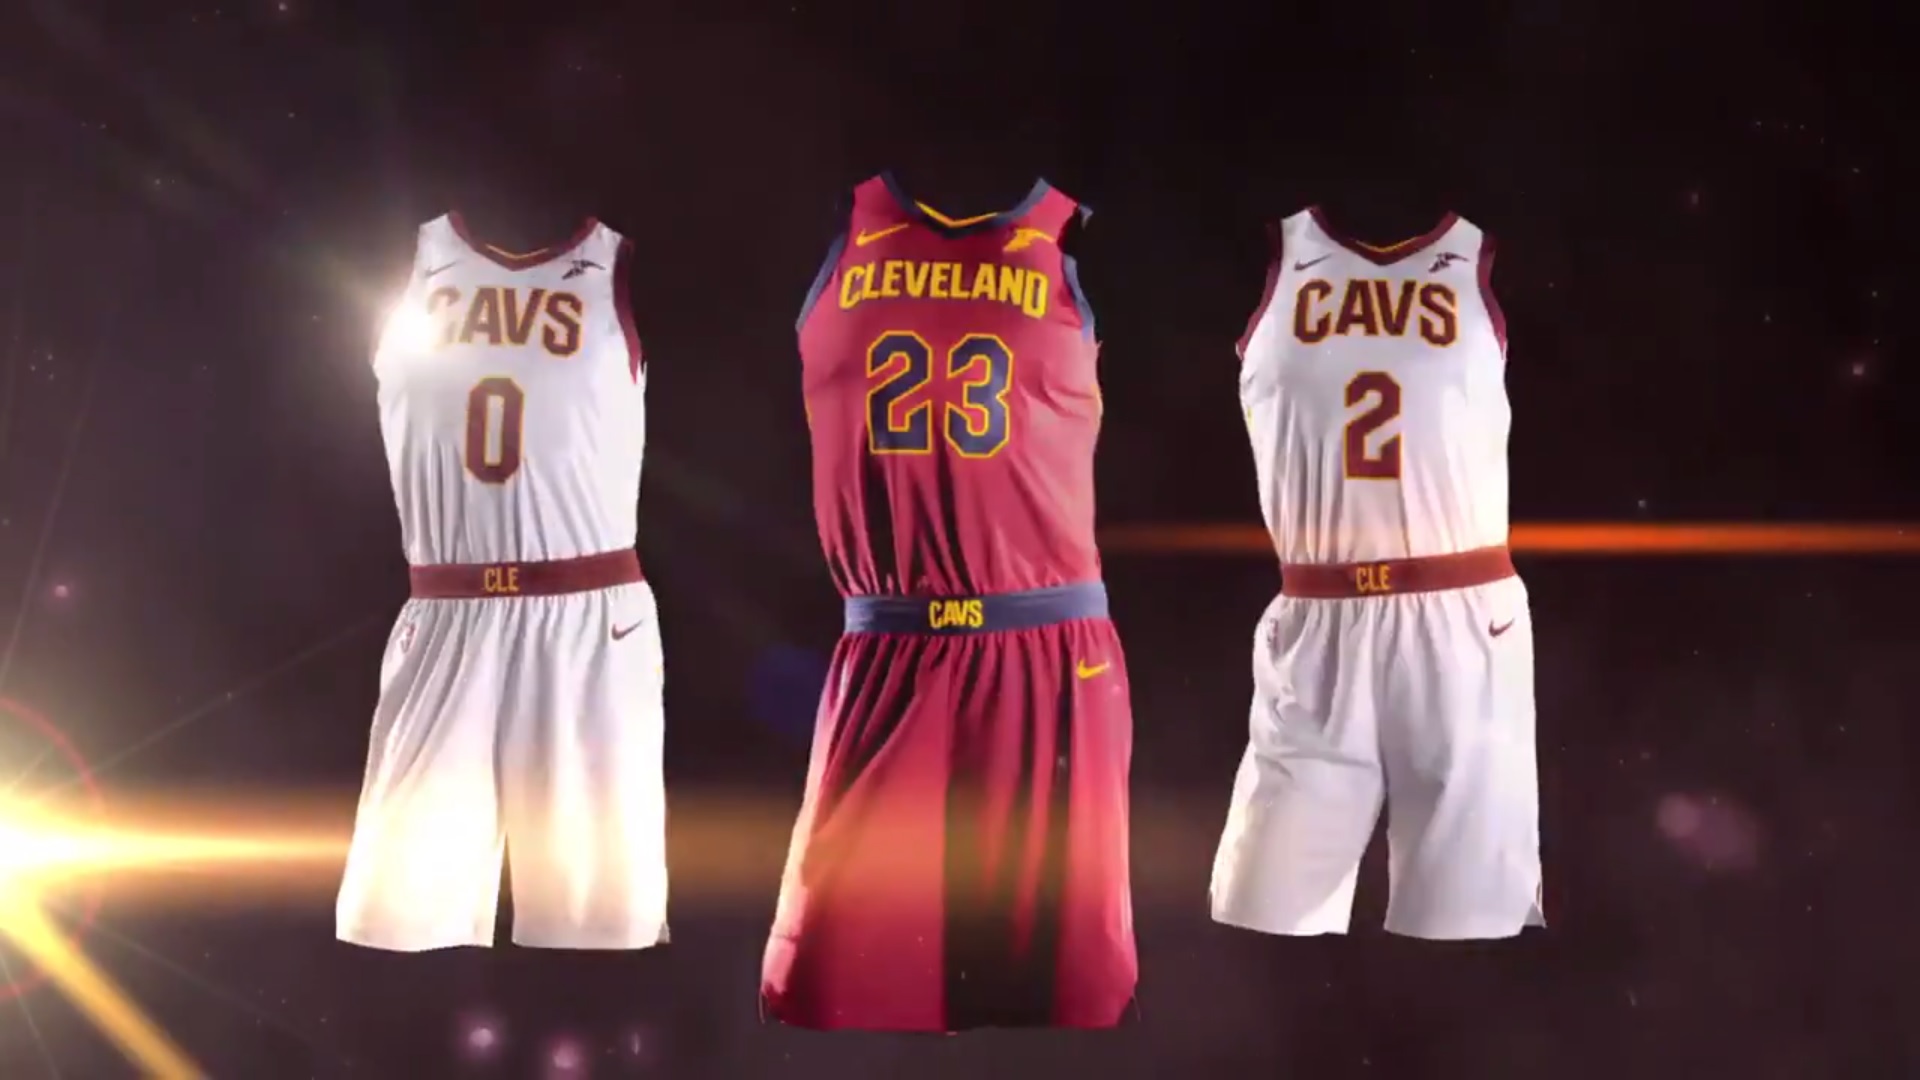 Cavs news: Cleveland introduces new Nike jerseys for 2017-18 NBA season